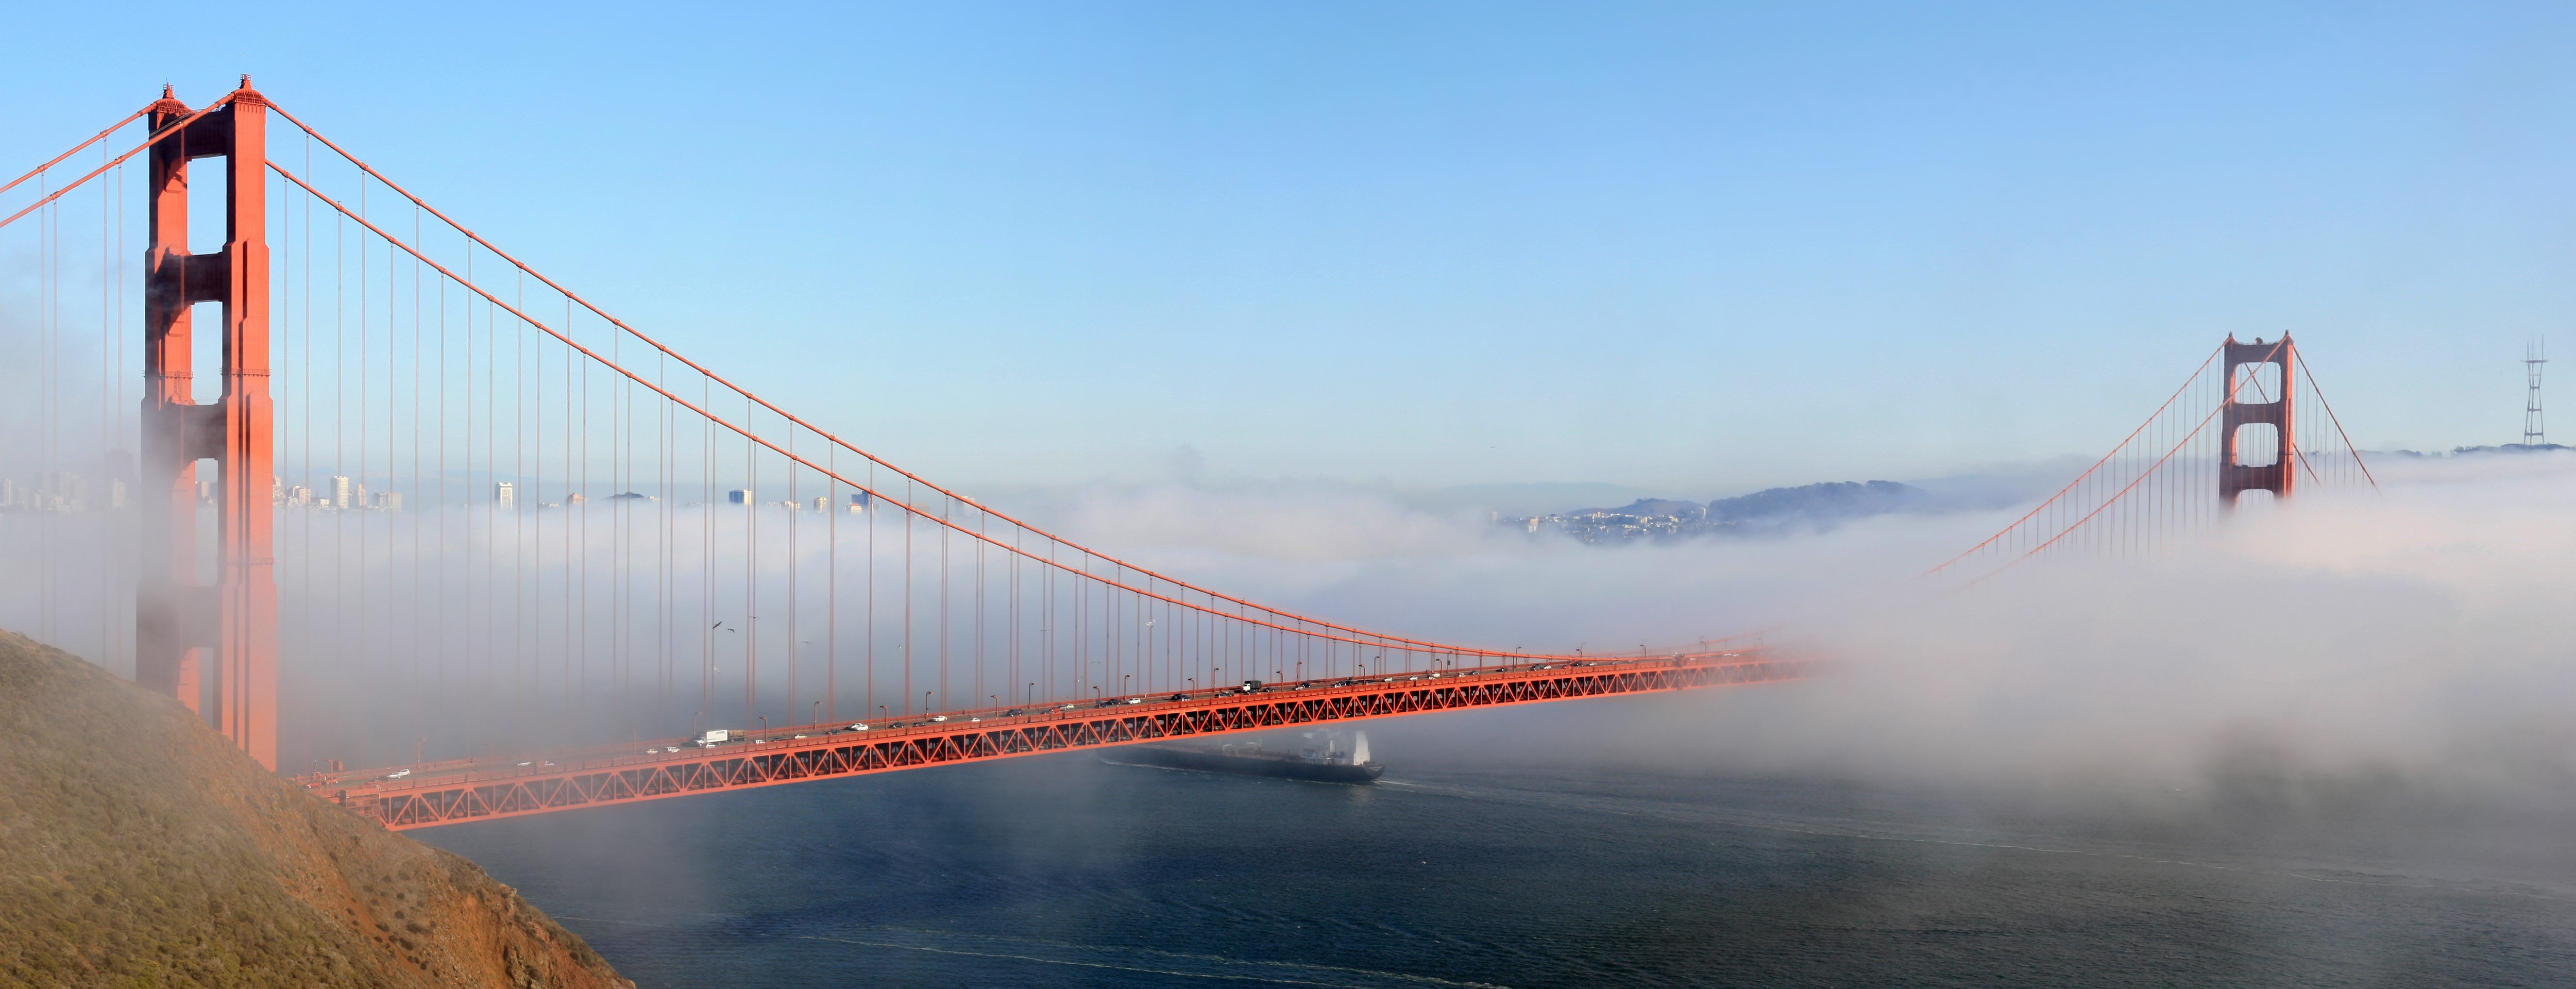 Golden Gate Bridge, San Francisco and Sutro Tower